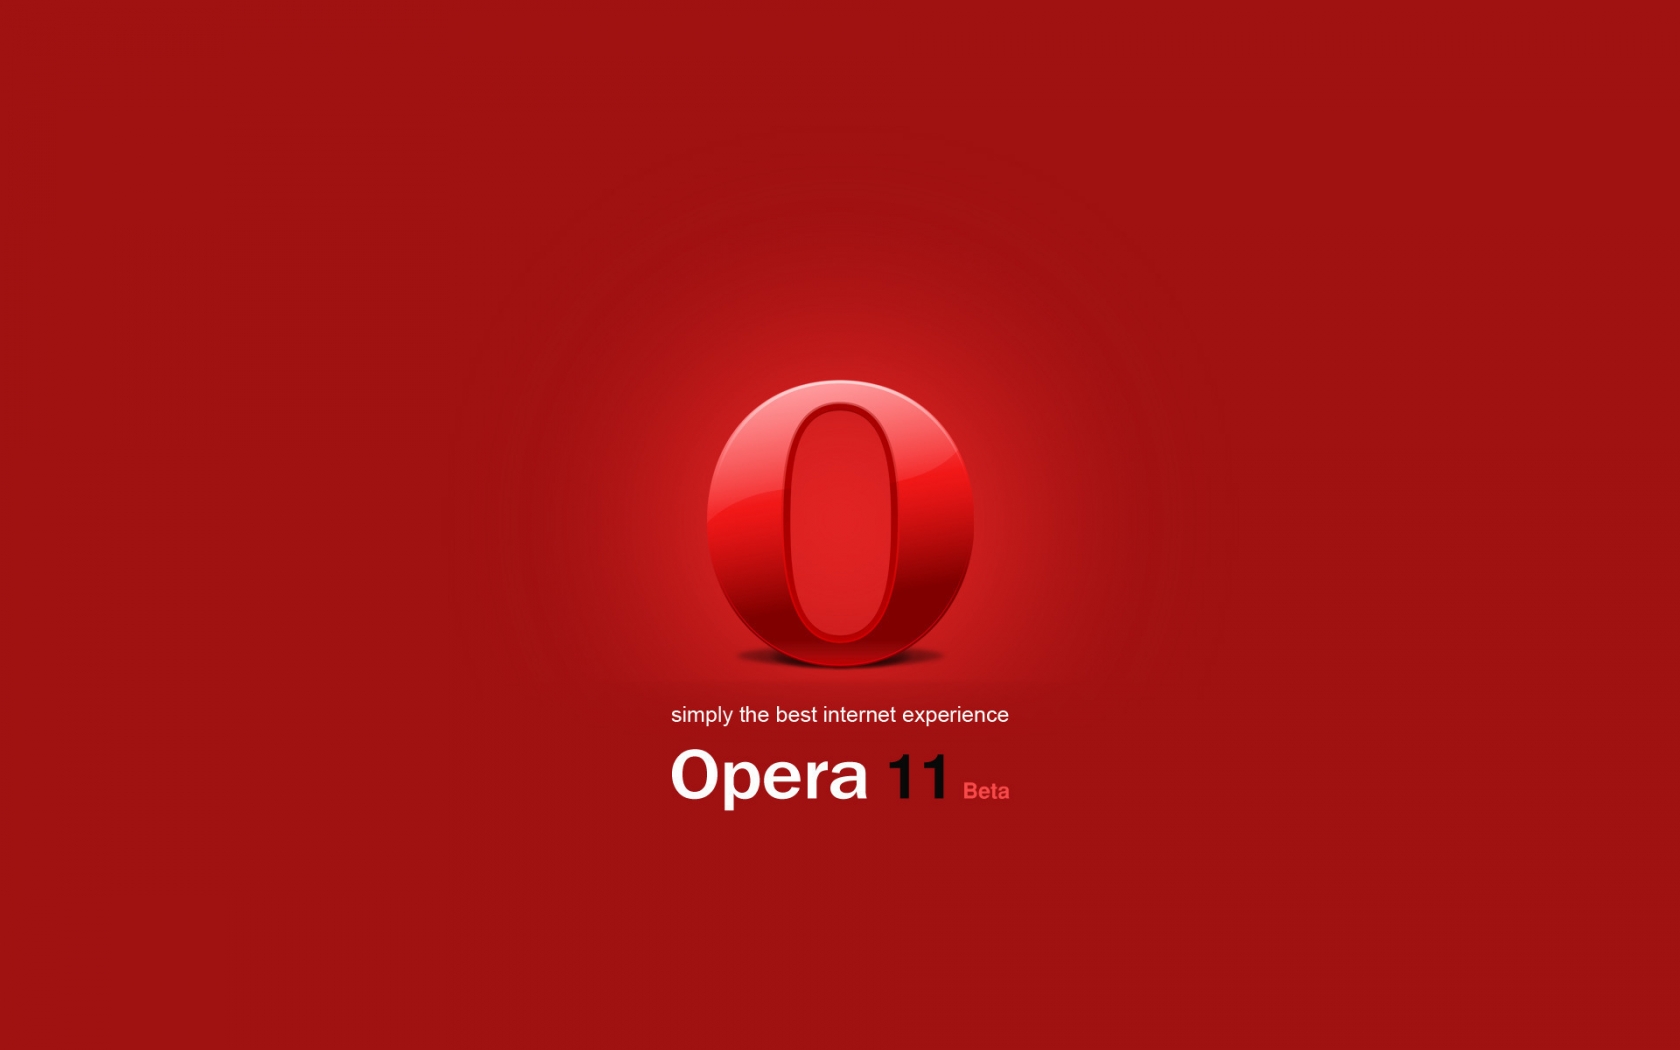 Opera 11 Beta for 1680 x 1050 widescreen resolution